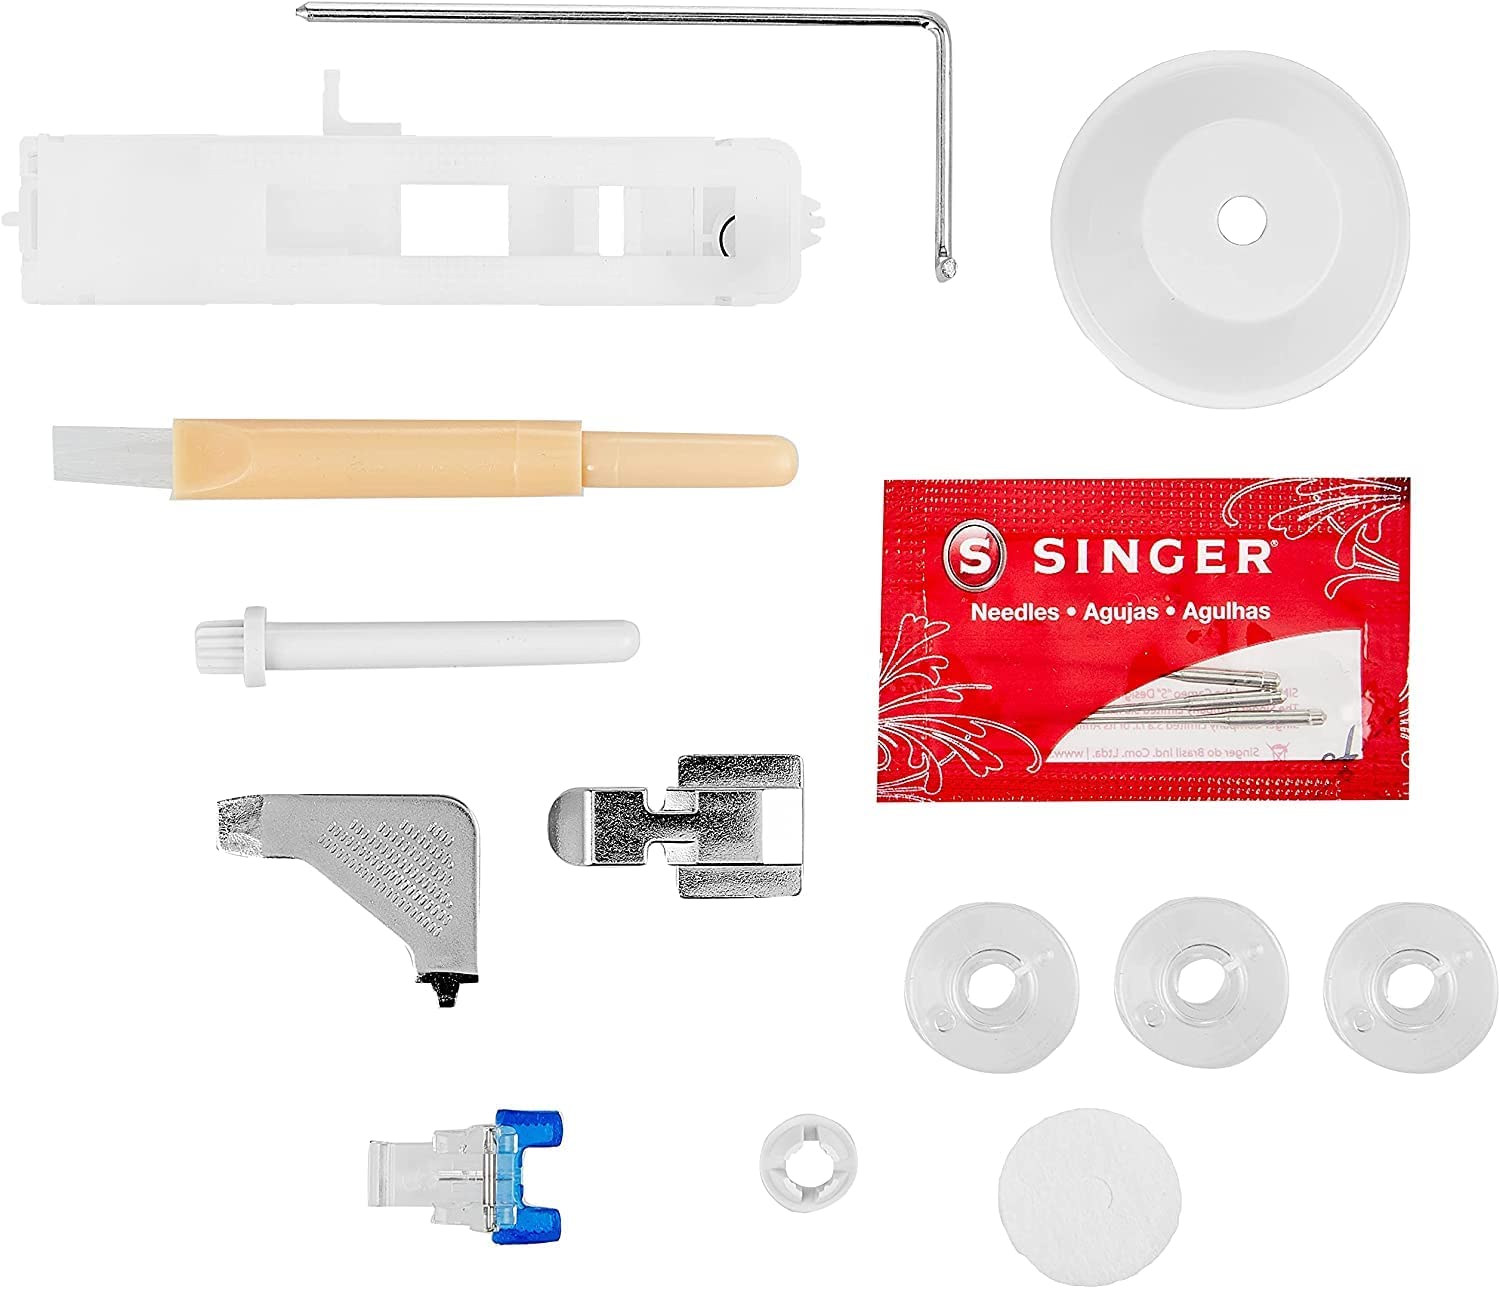 چرخ خیاطی سینگر مدل SINGER  4423 Sewing Machine - ارسال 10 الی 15 روز کاری